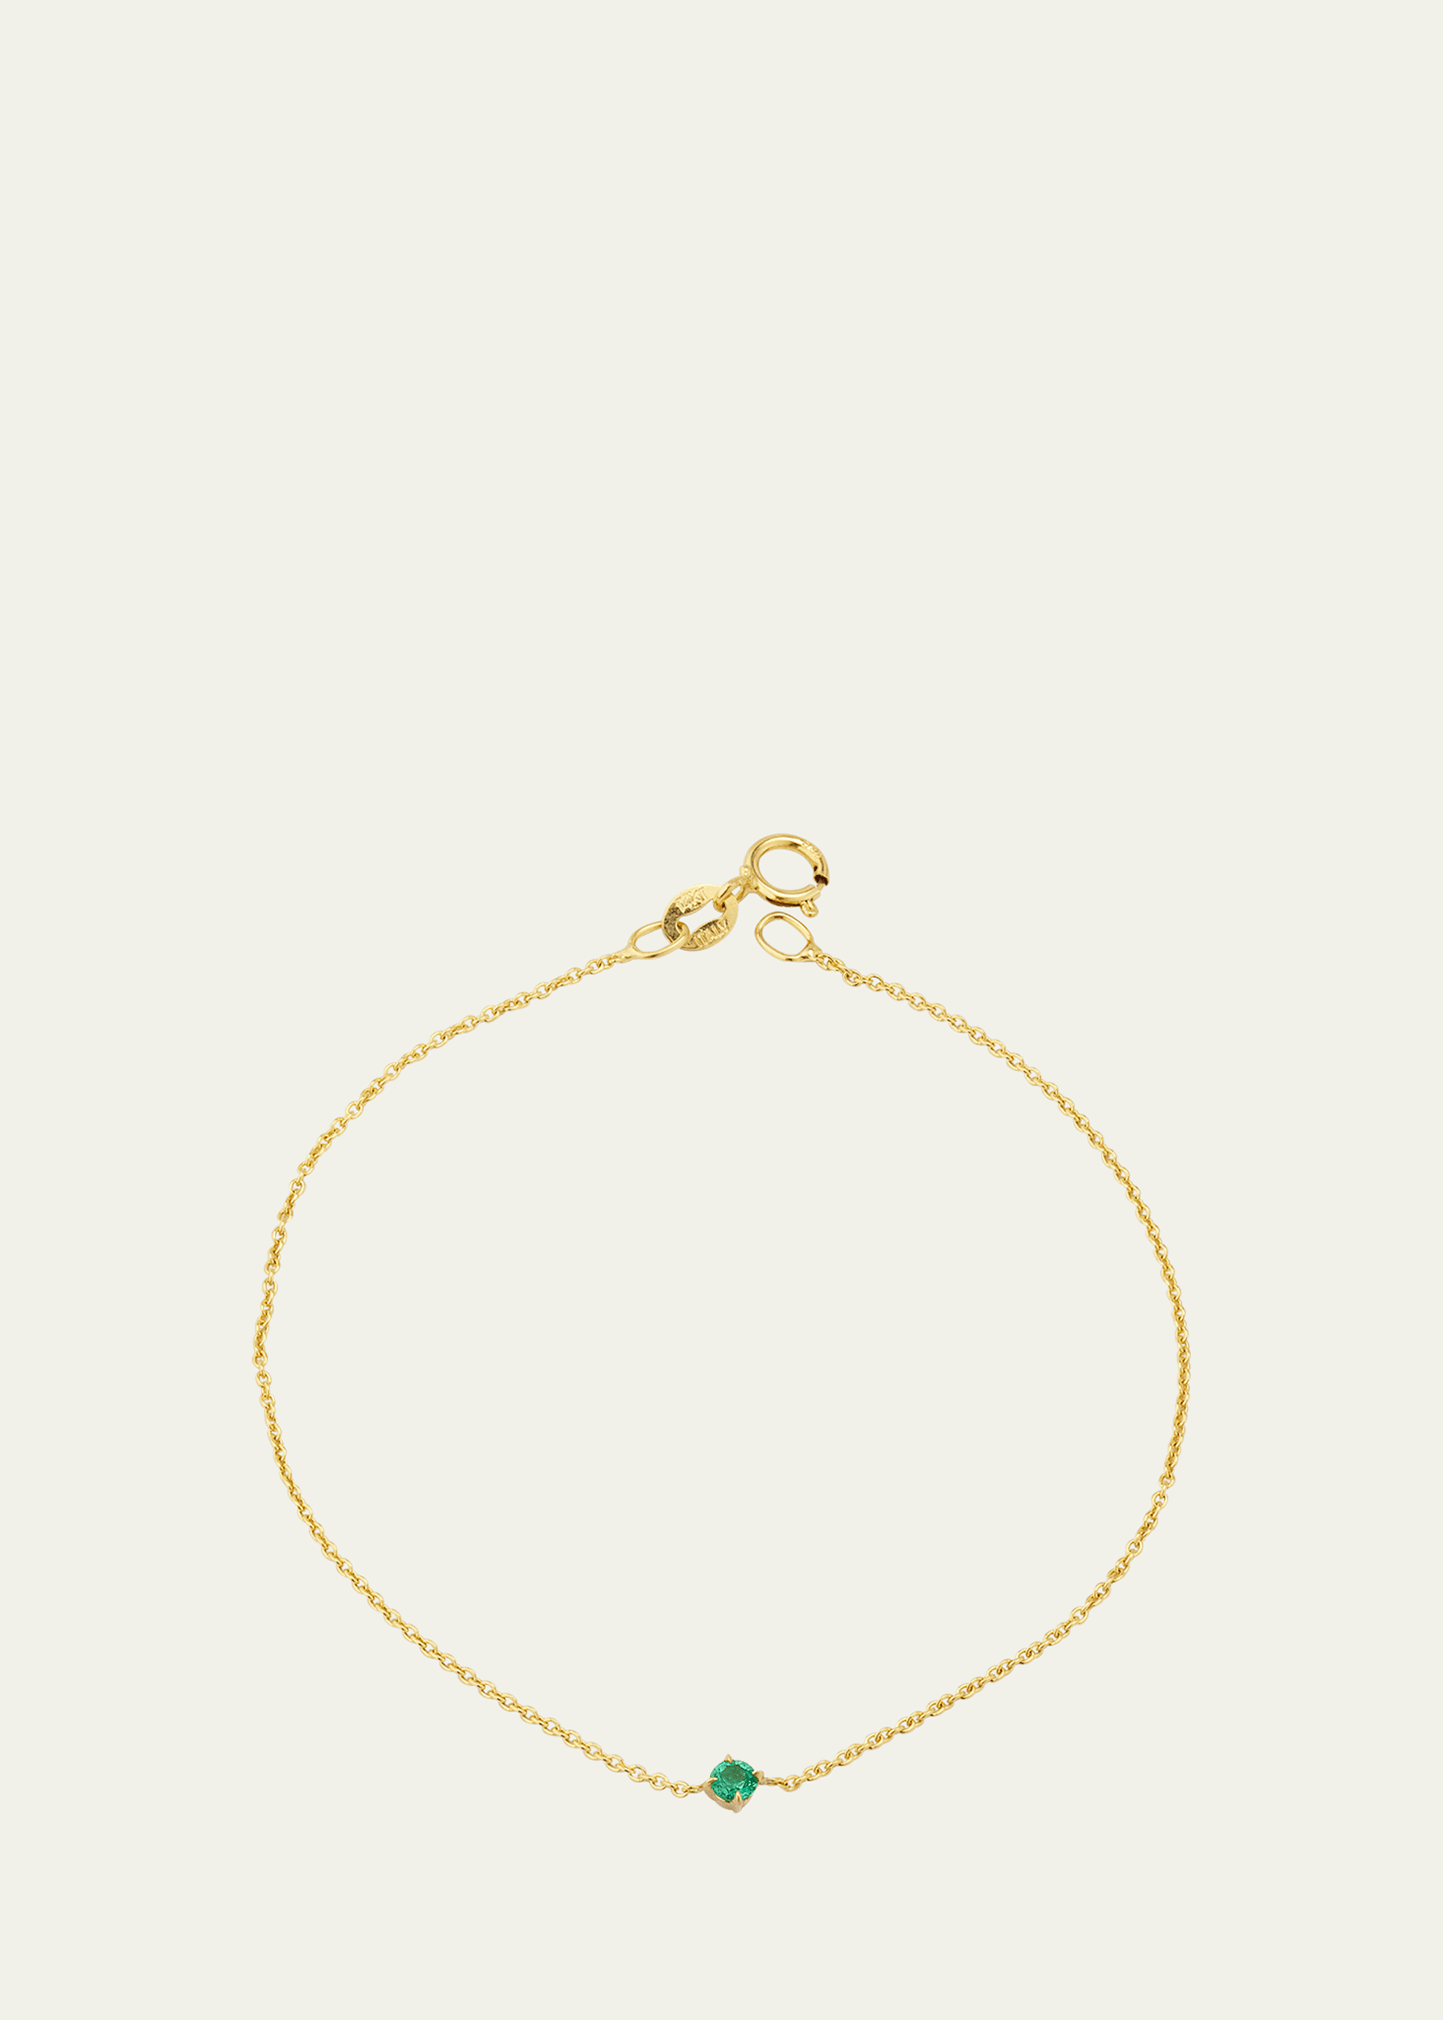 Round White Diamond Floating Necklace, 16"L